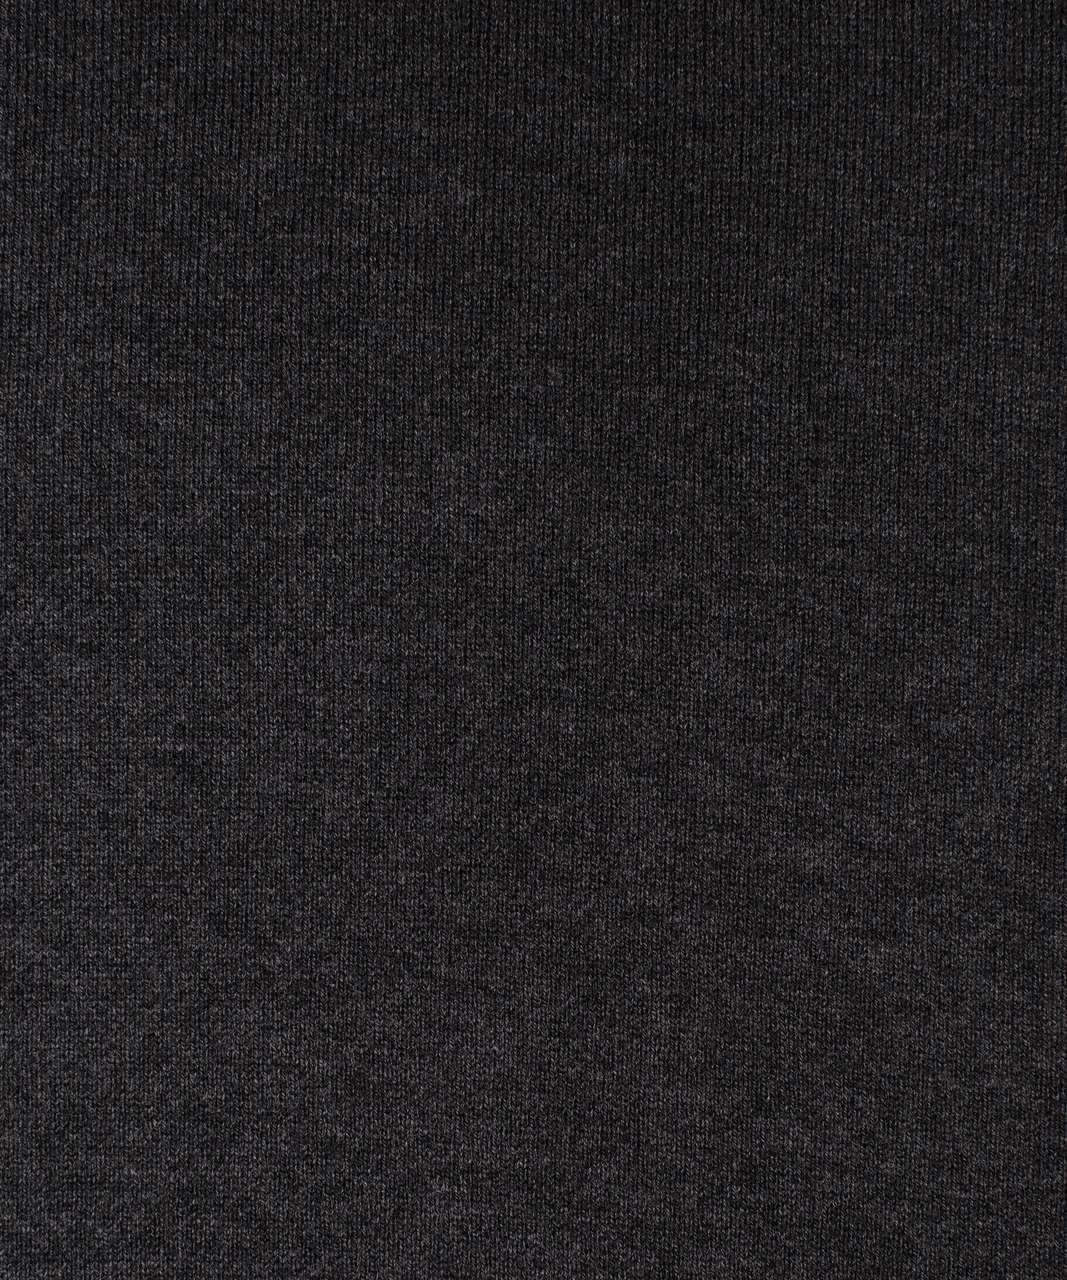 Lululemon Still Lotus Sweater *Reversible - Heathered Black / Heathered Titanium / Heathered Black